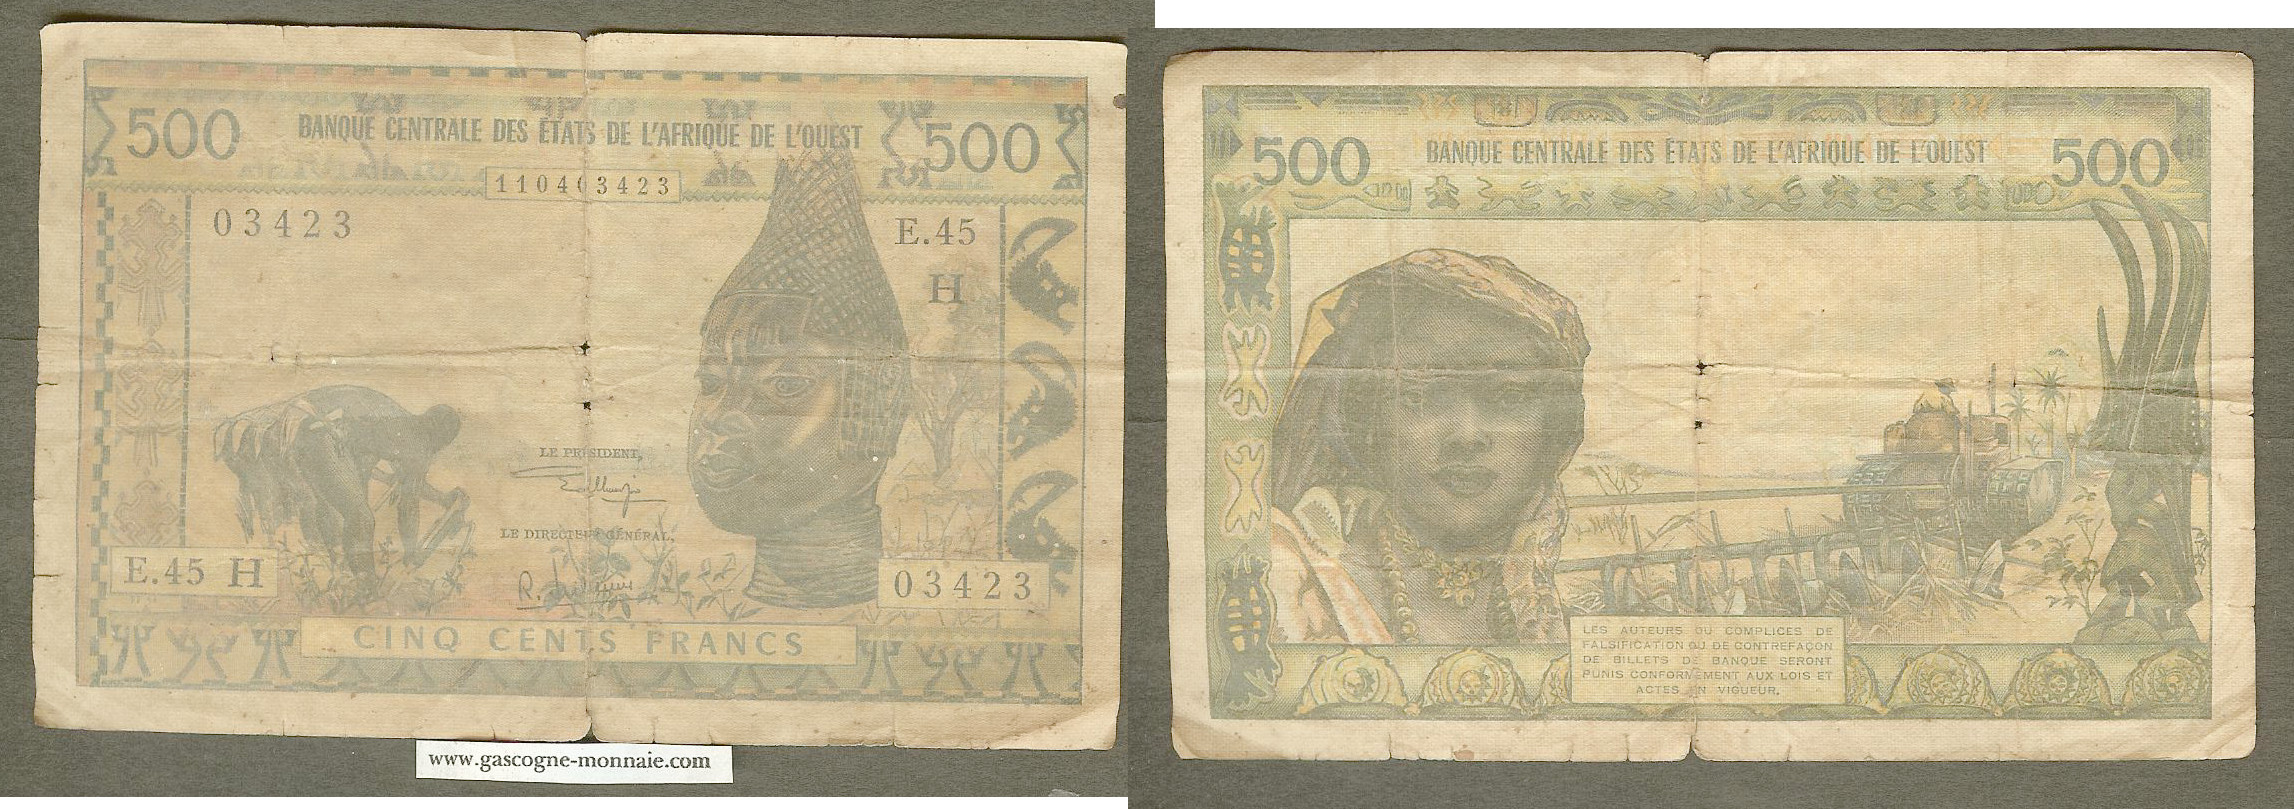 500 Francs ÉTATS DE L\'AFRIQUE DE L\'OUEST 1973  TB